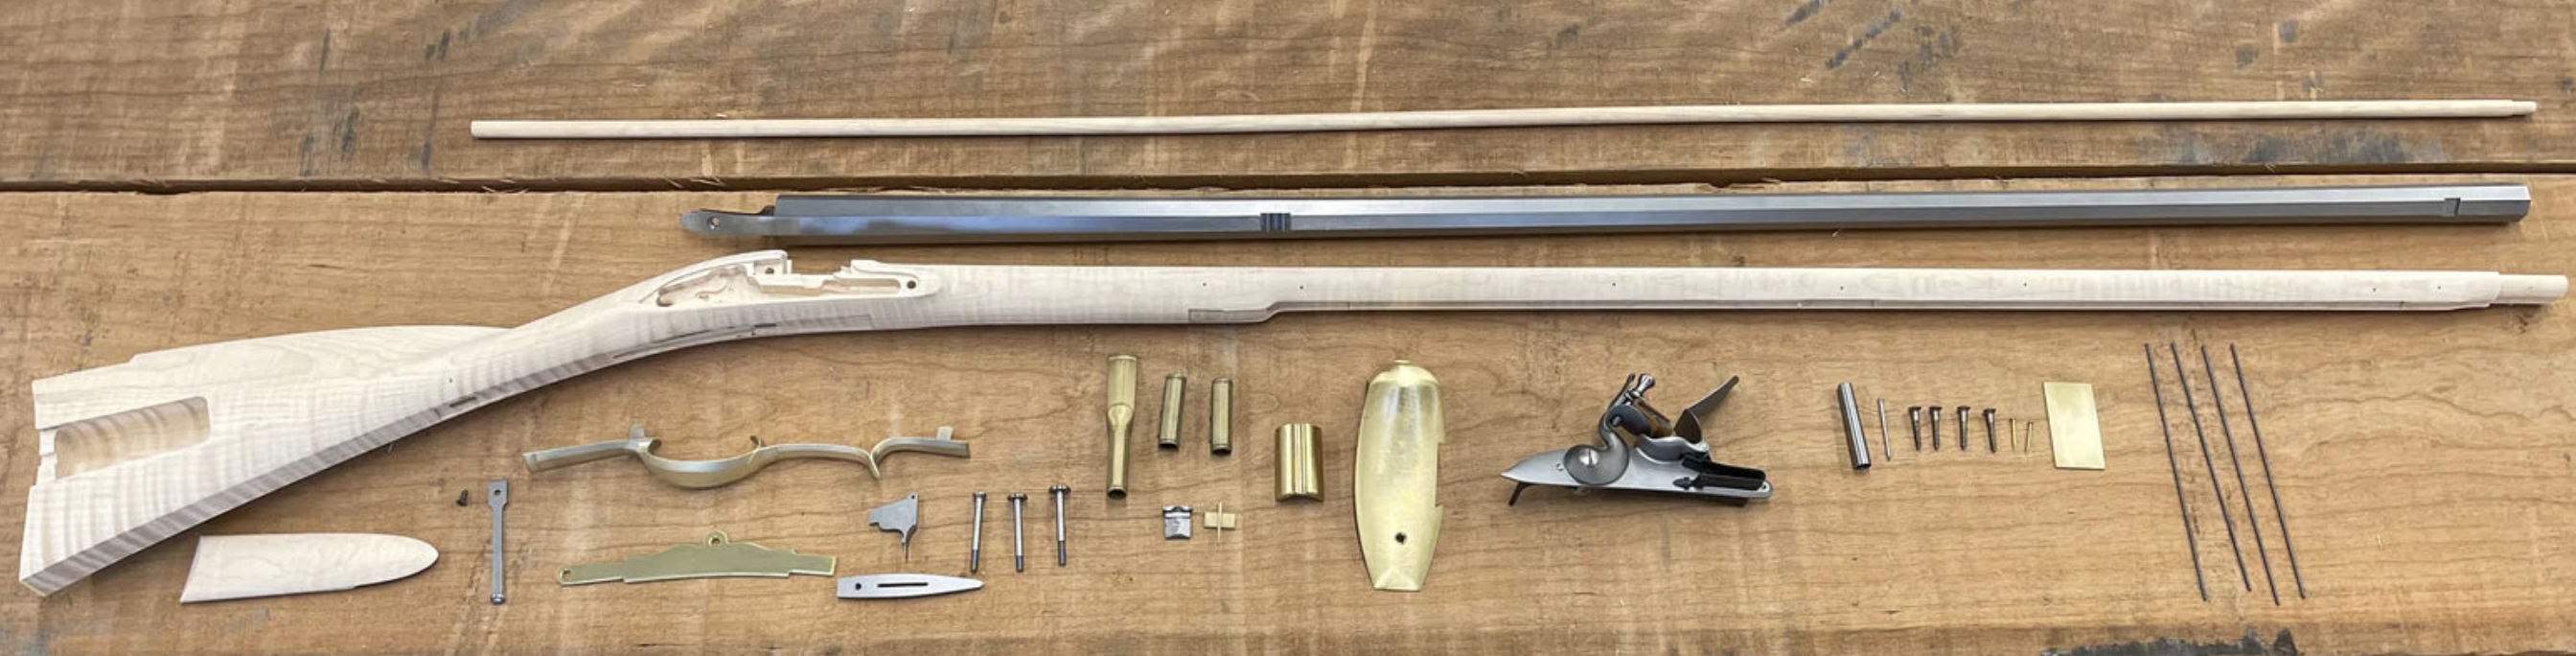 flintlock rifle building kit.